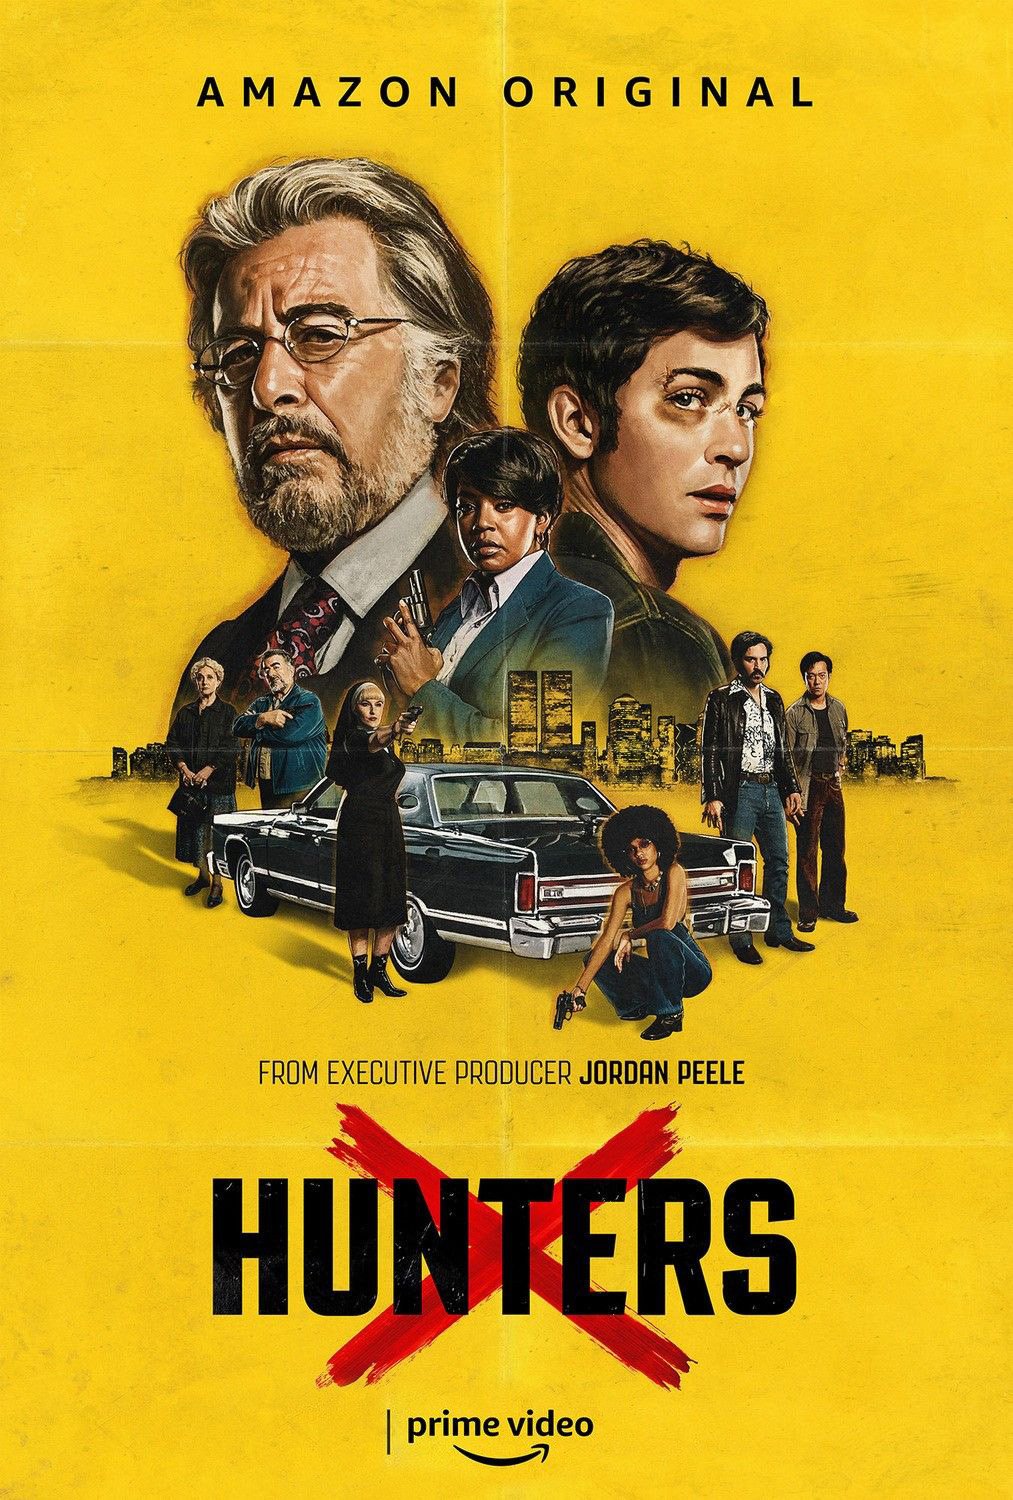 hunters poster edited.jpg